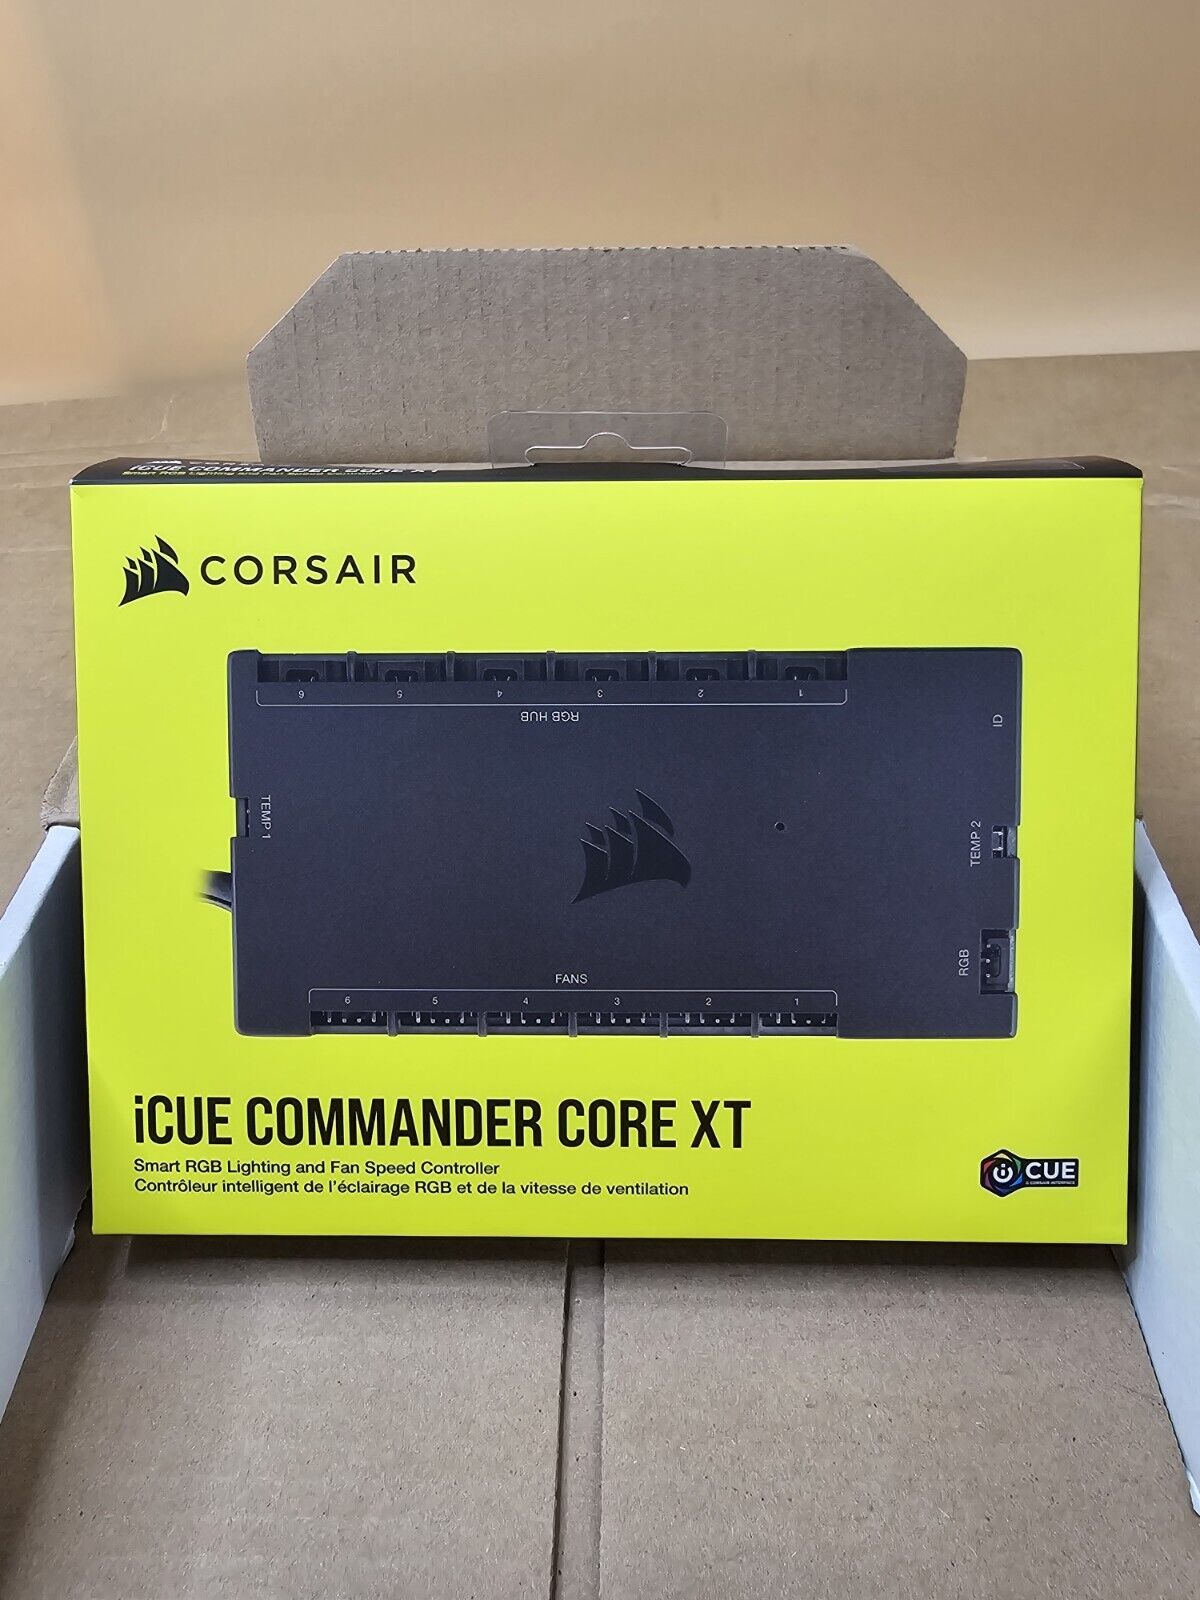 Corsair iCue Commander Core XT (New - Open Box)